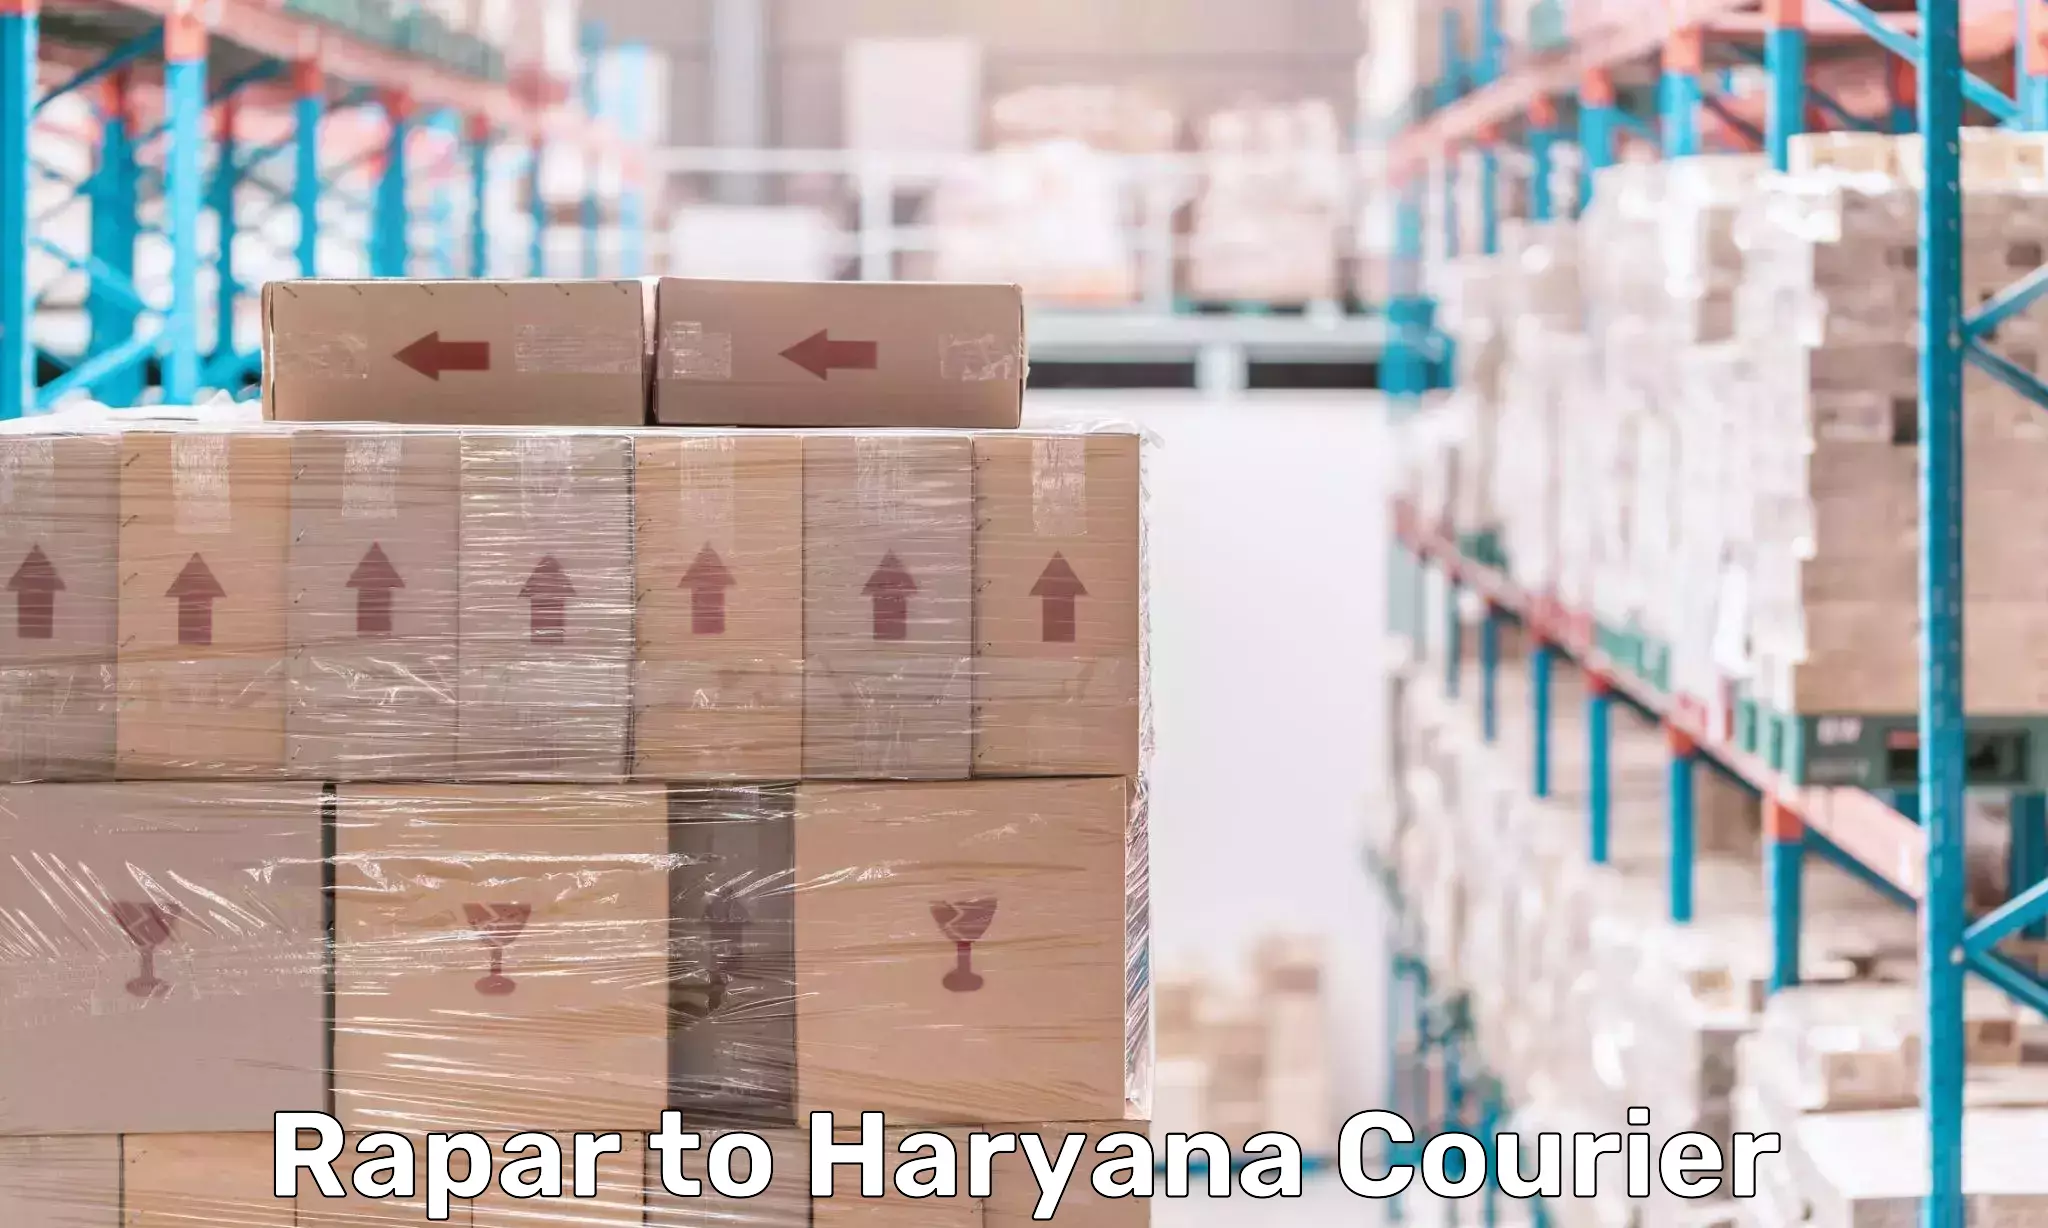 High-performance logistics in Rapar to Haryana